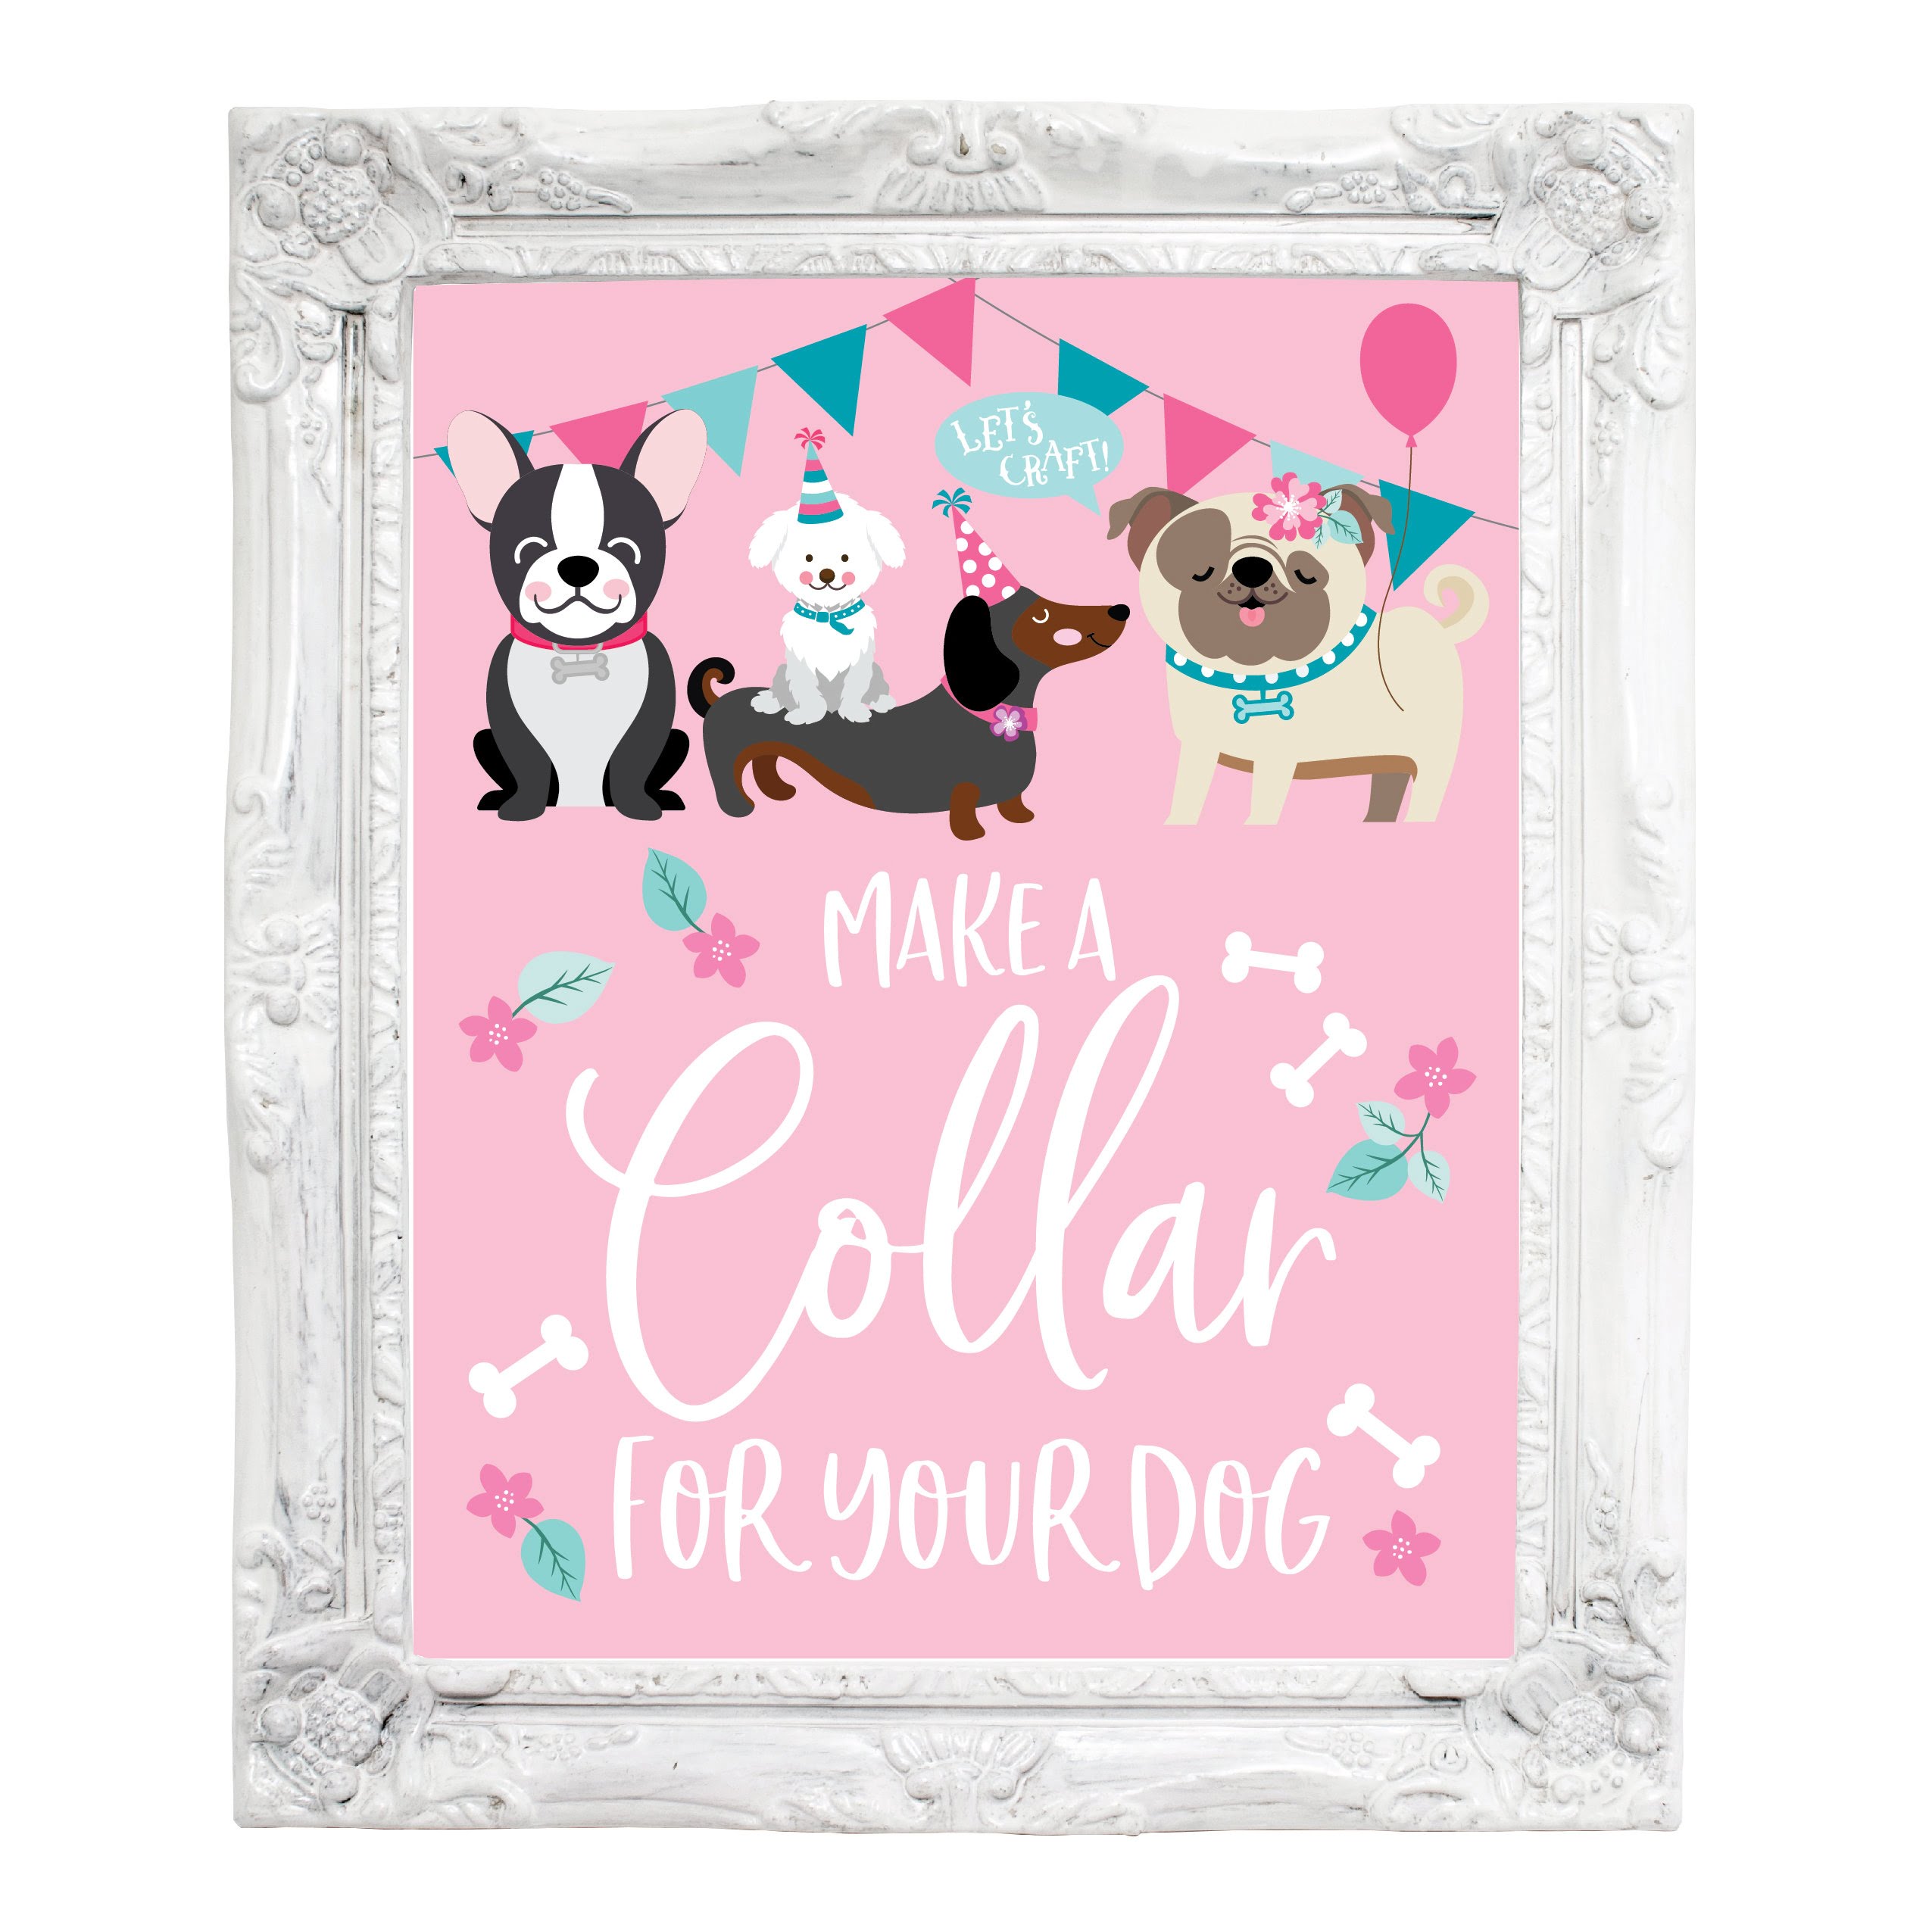 Make A Collar For Your Dog Party Sign Dog Birthday Printable Etsy de